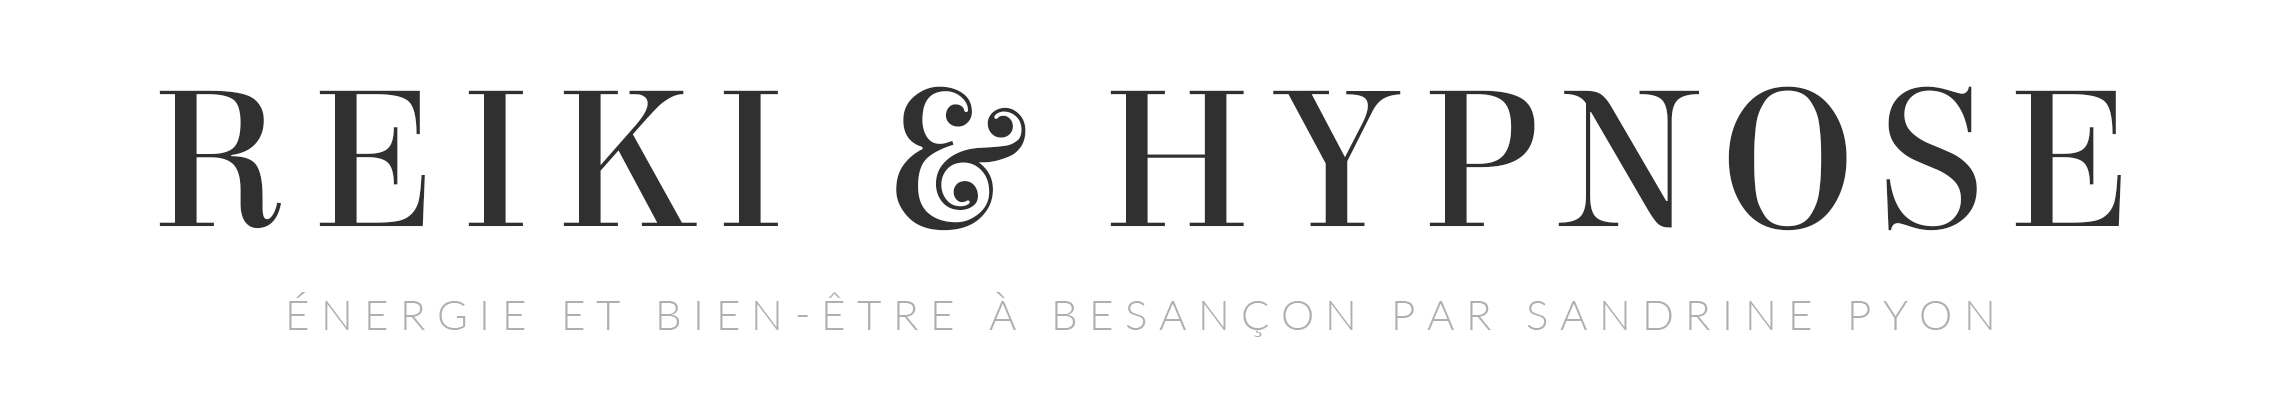 Reiki Hypnose Medium Besançon